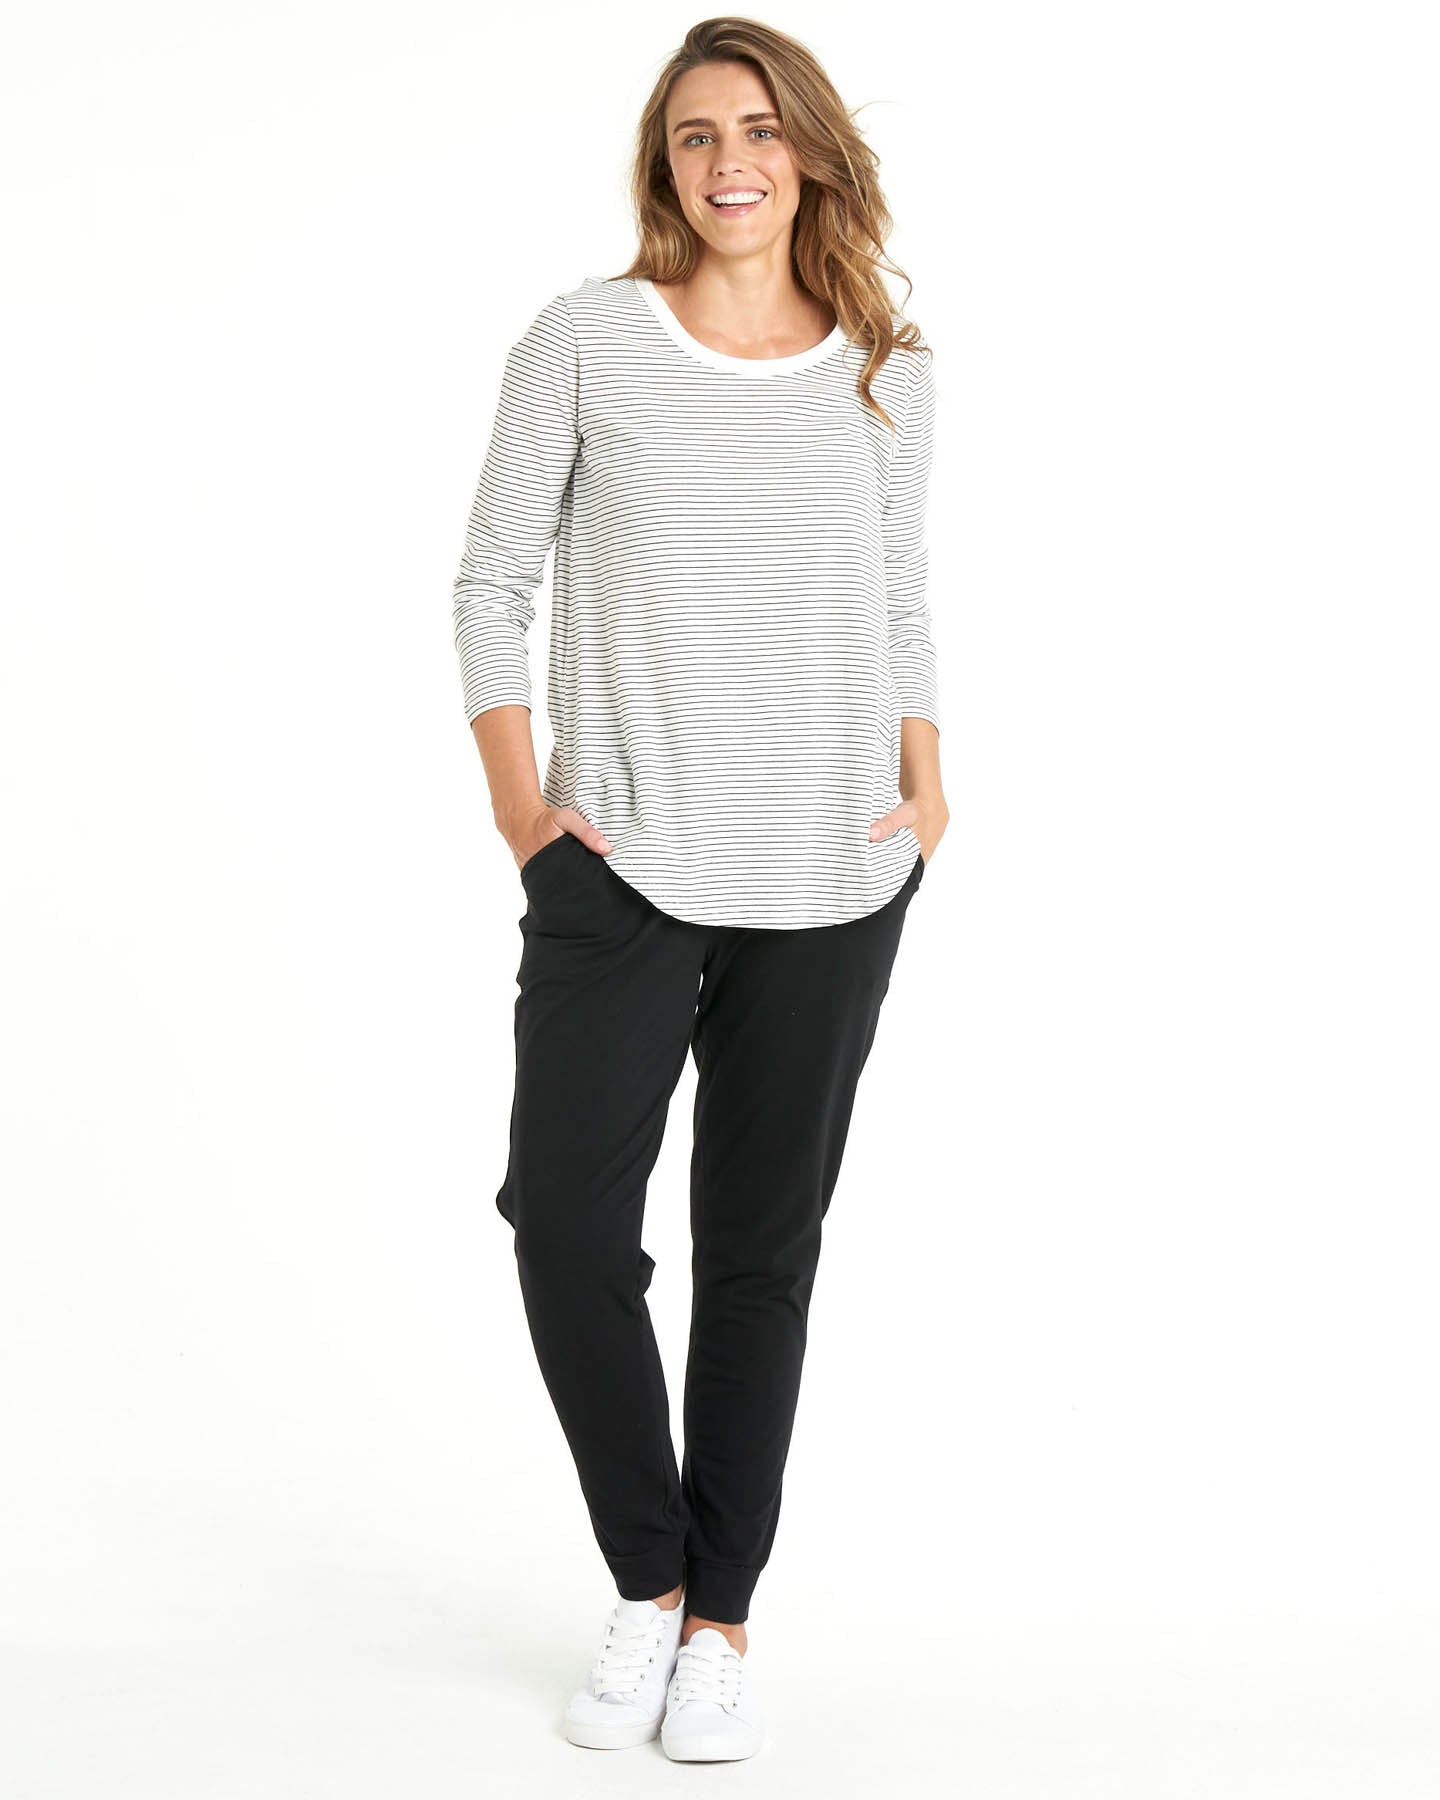 Megan Long Sleeve Cotton Basic Top - White / Black Stripe